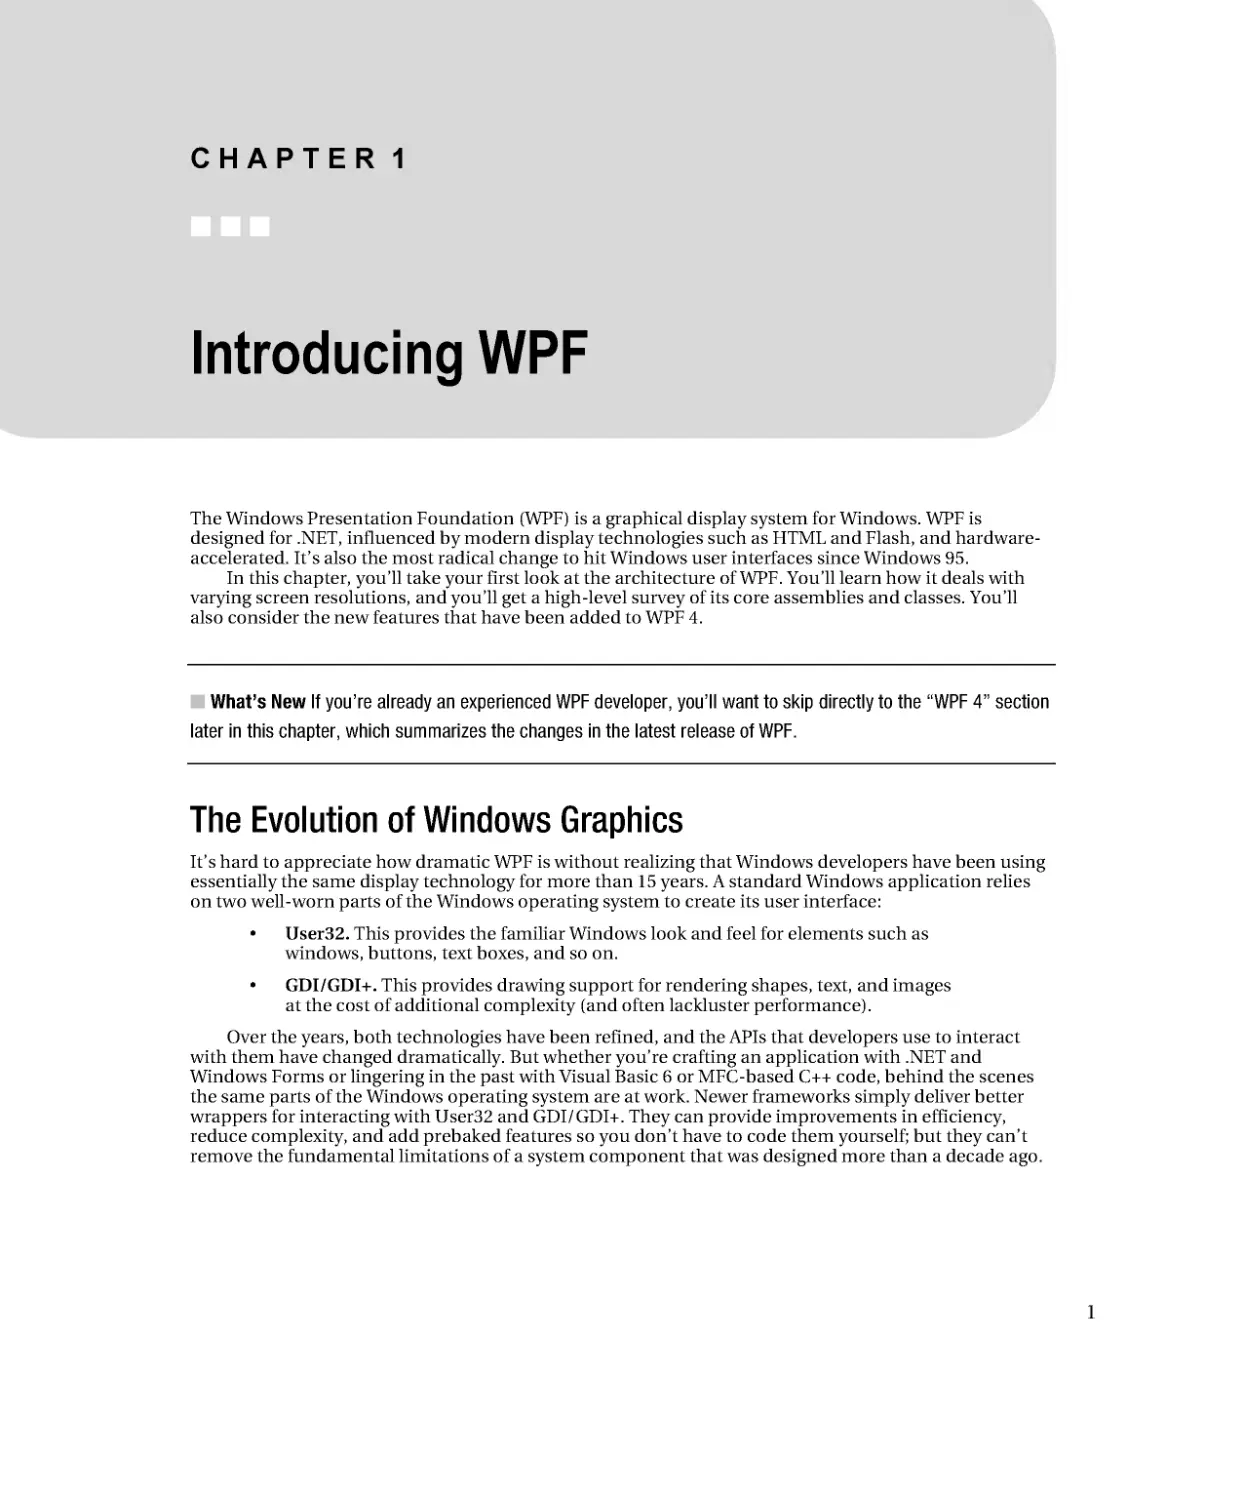 Introducing WPF